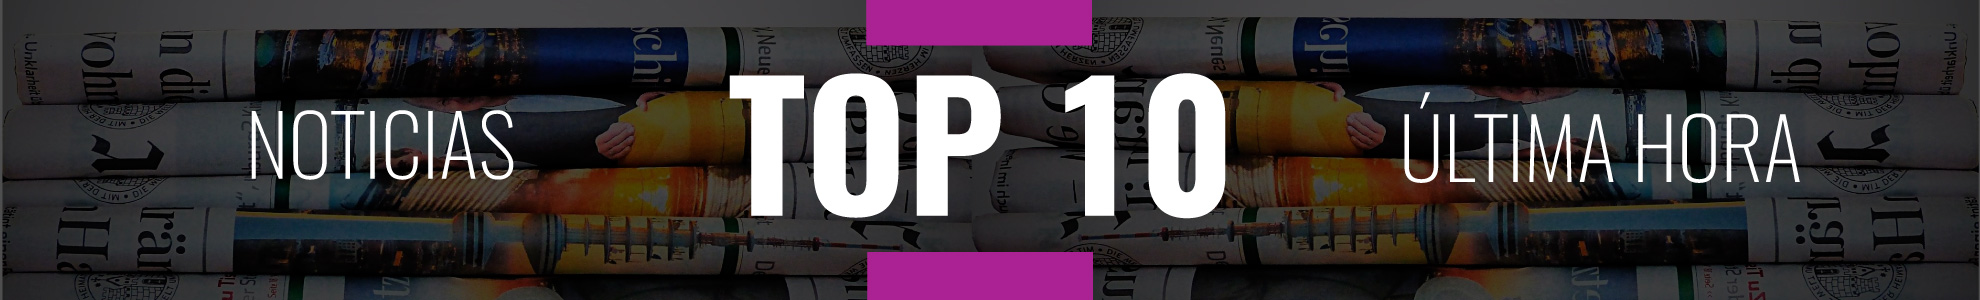 Top10 Digital News Lyon